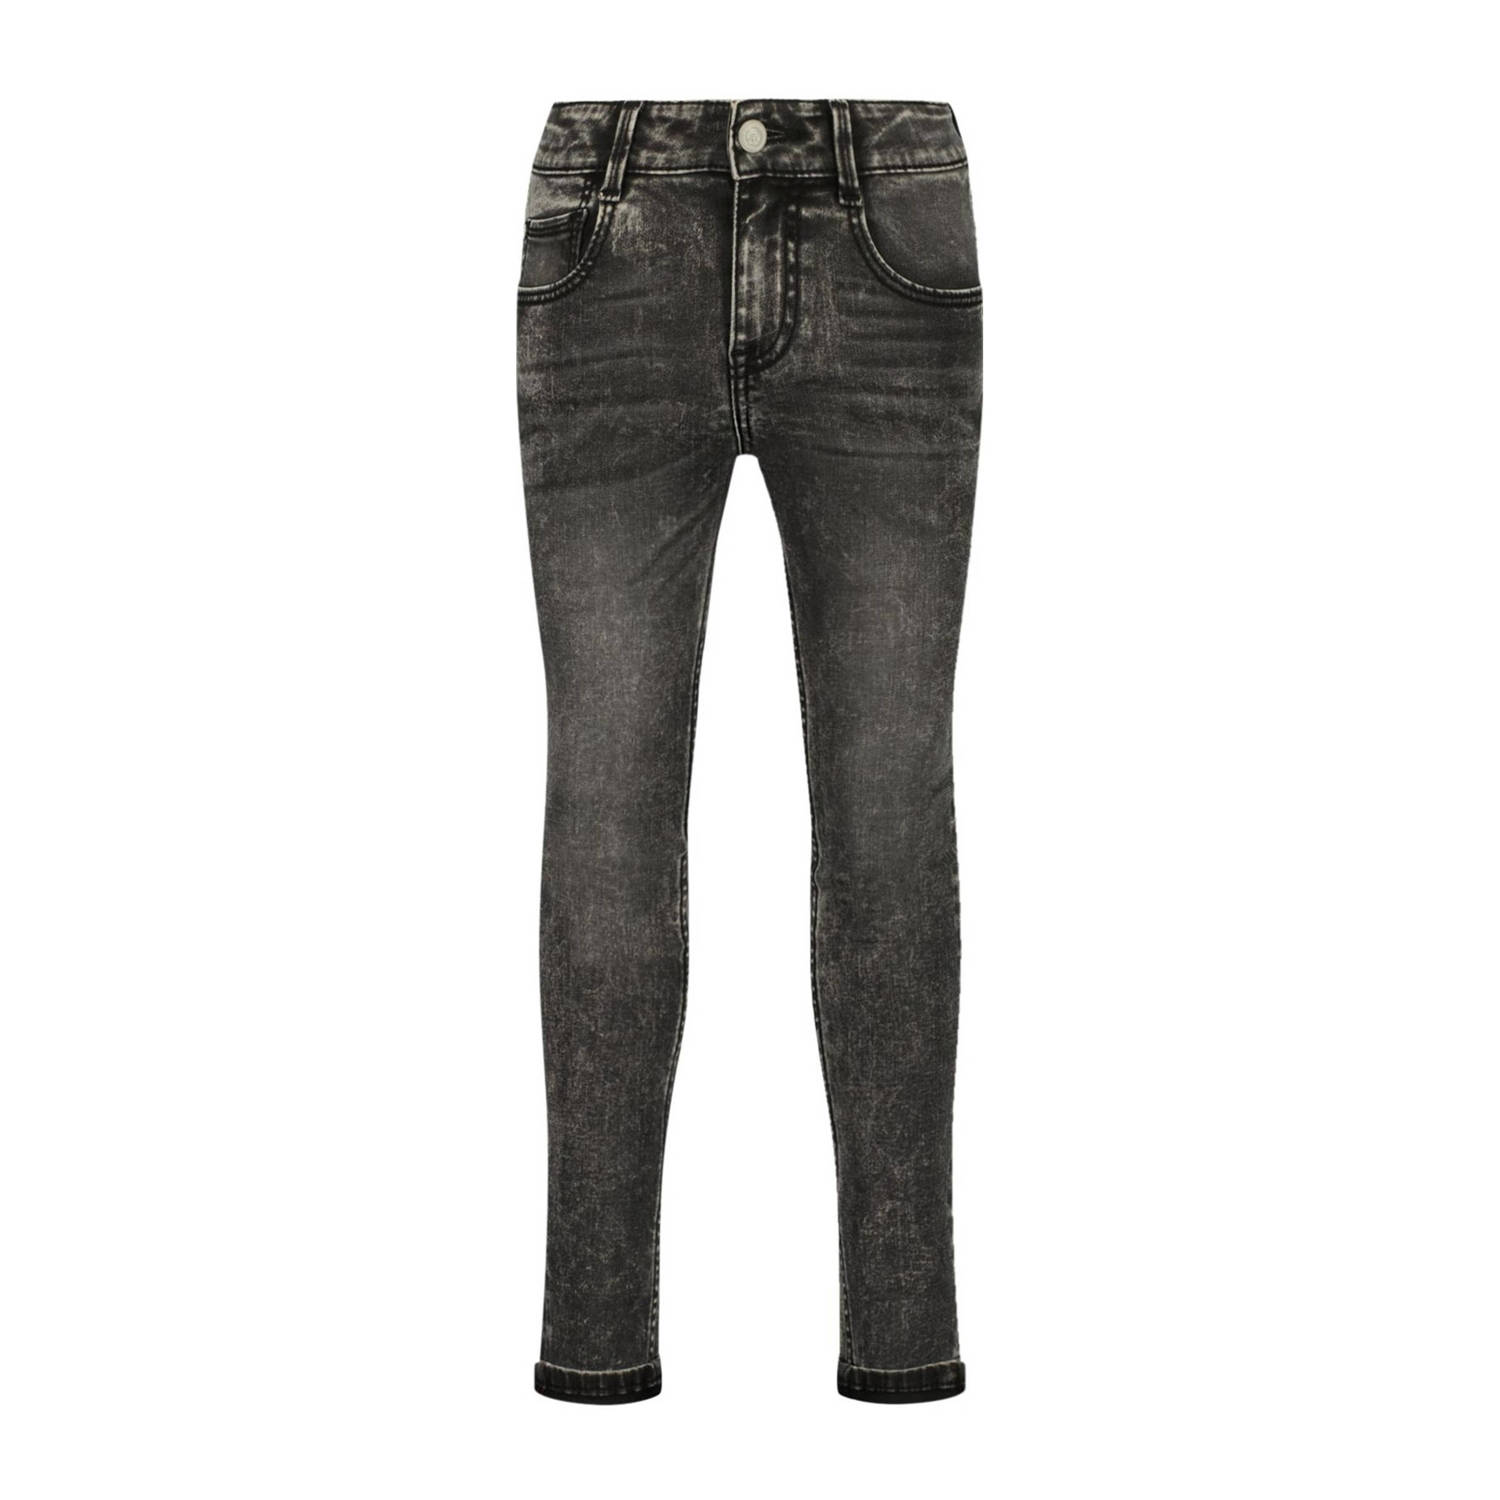 Raizzed skinny jeans Bangkok vintage grey